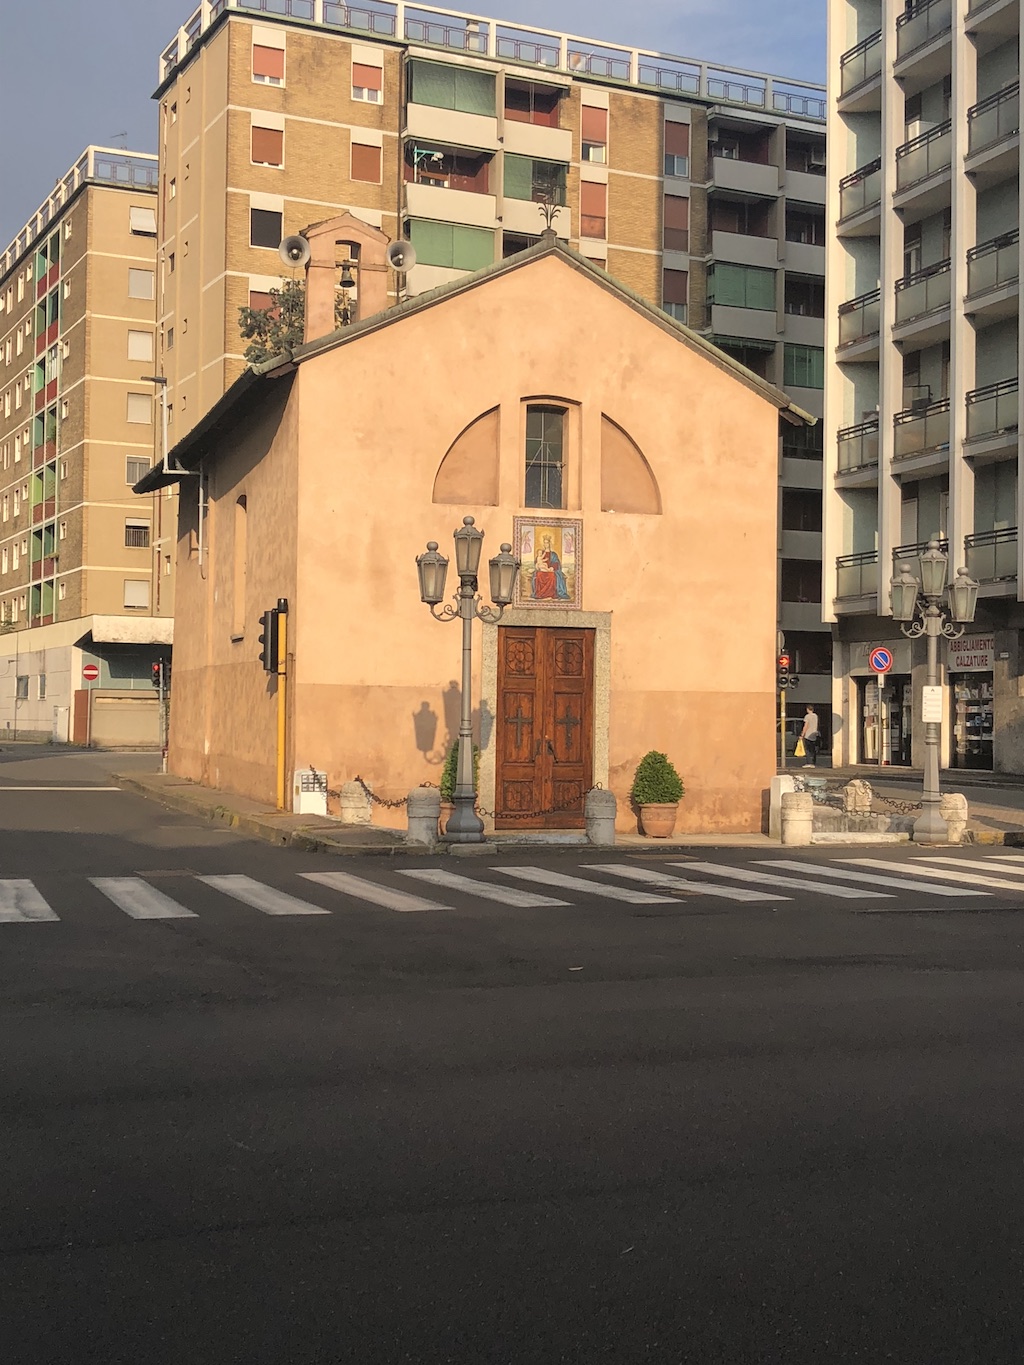 little-madonna-church-right-around-the-corner-from-rivolta-park